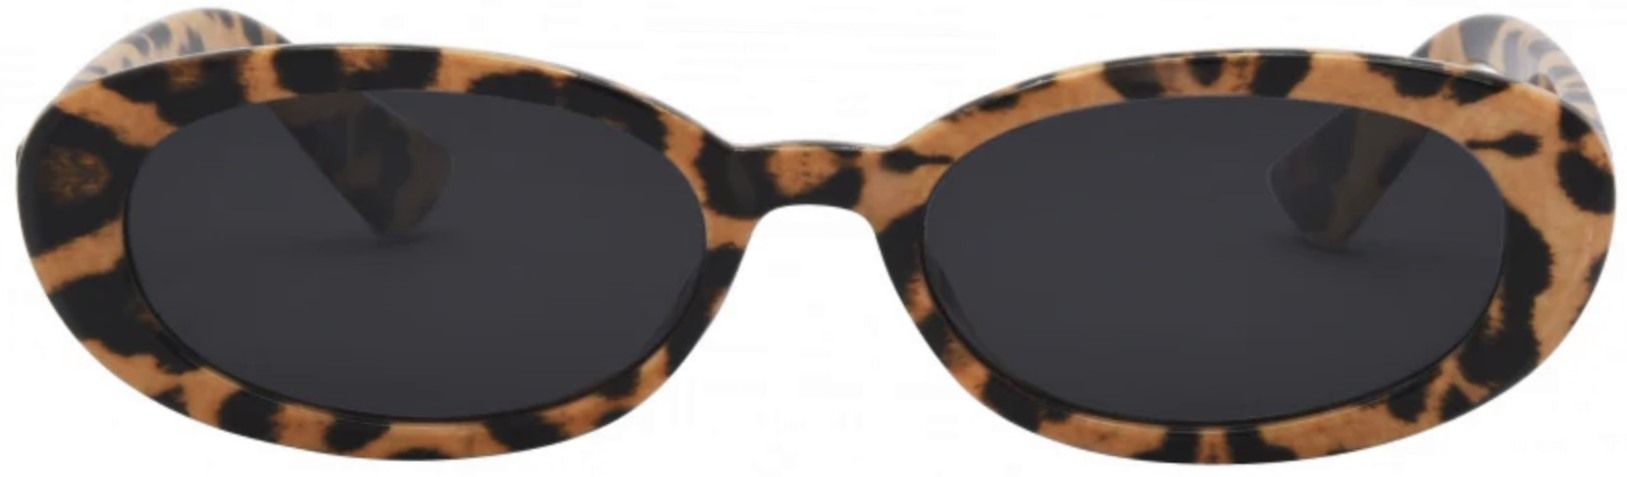 Holden Sunglasses (Leopard) | style